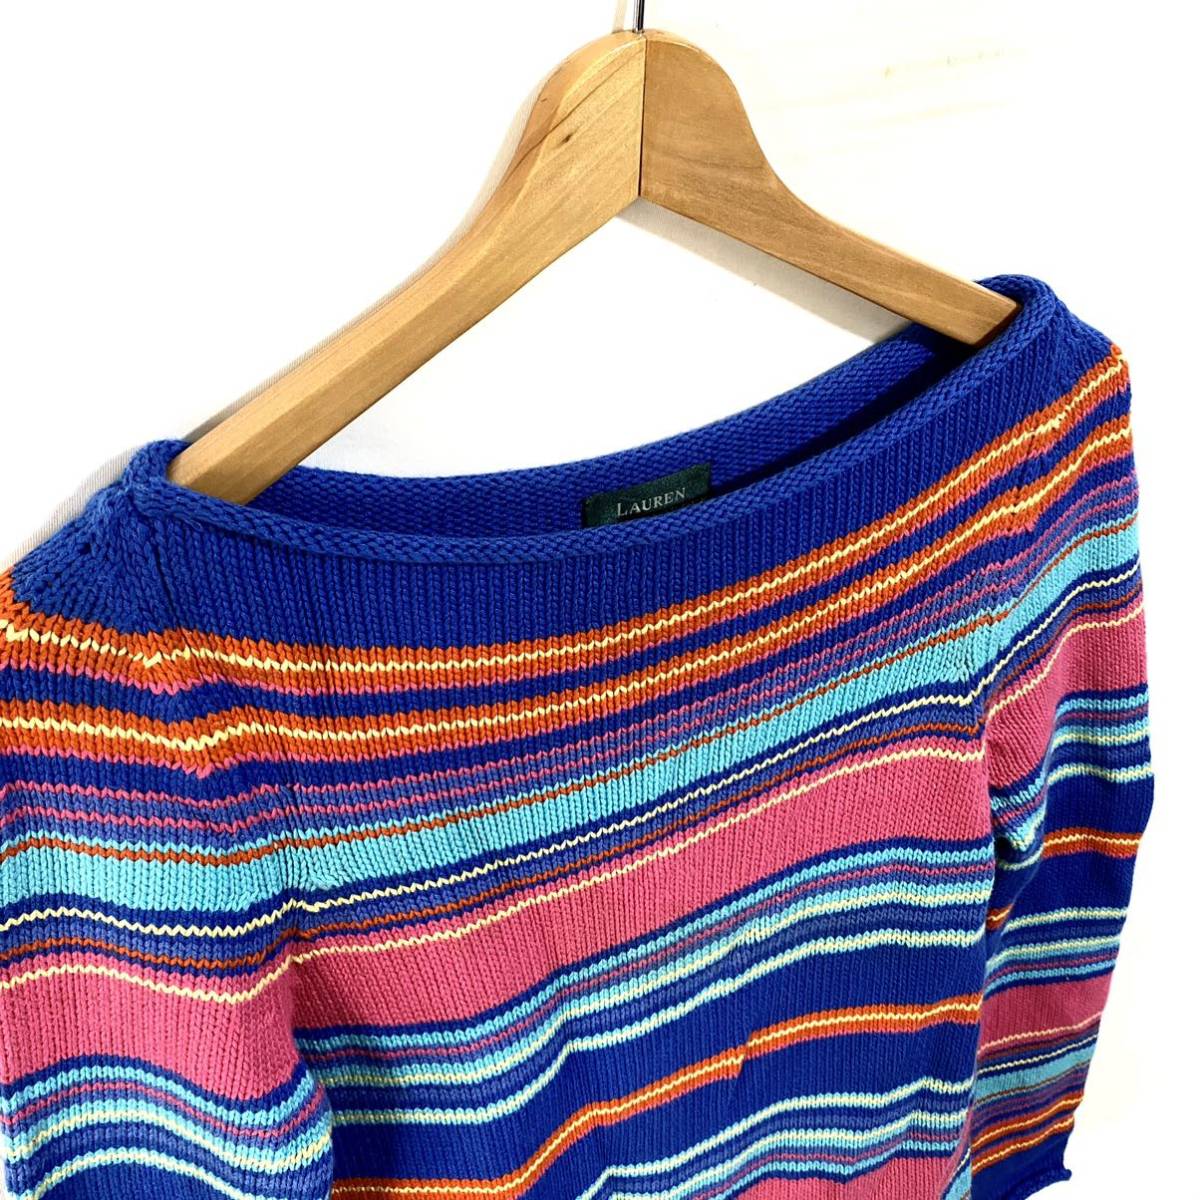 # for women LAUREN RALPH LAUREN Ralph Lauren multi border pattern boat neck cotton knitted sweater old clothes total pattern size Mla gran #